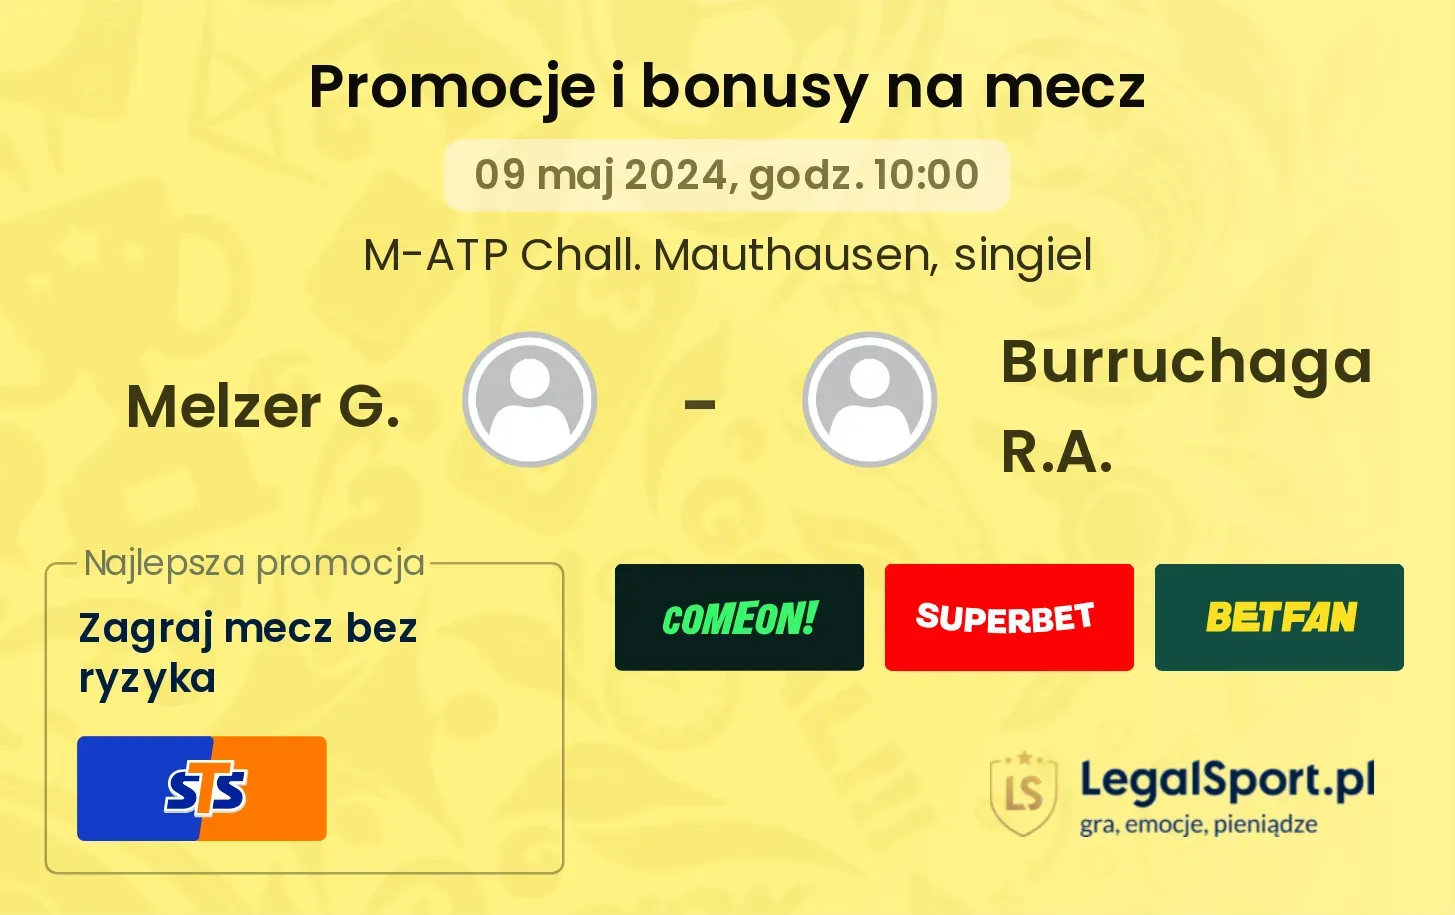 Melzer G. - Burruchaga R.A. promocje bonusy na mecz